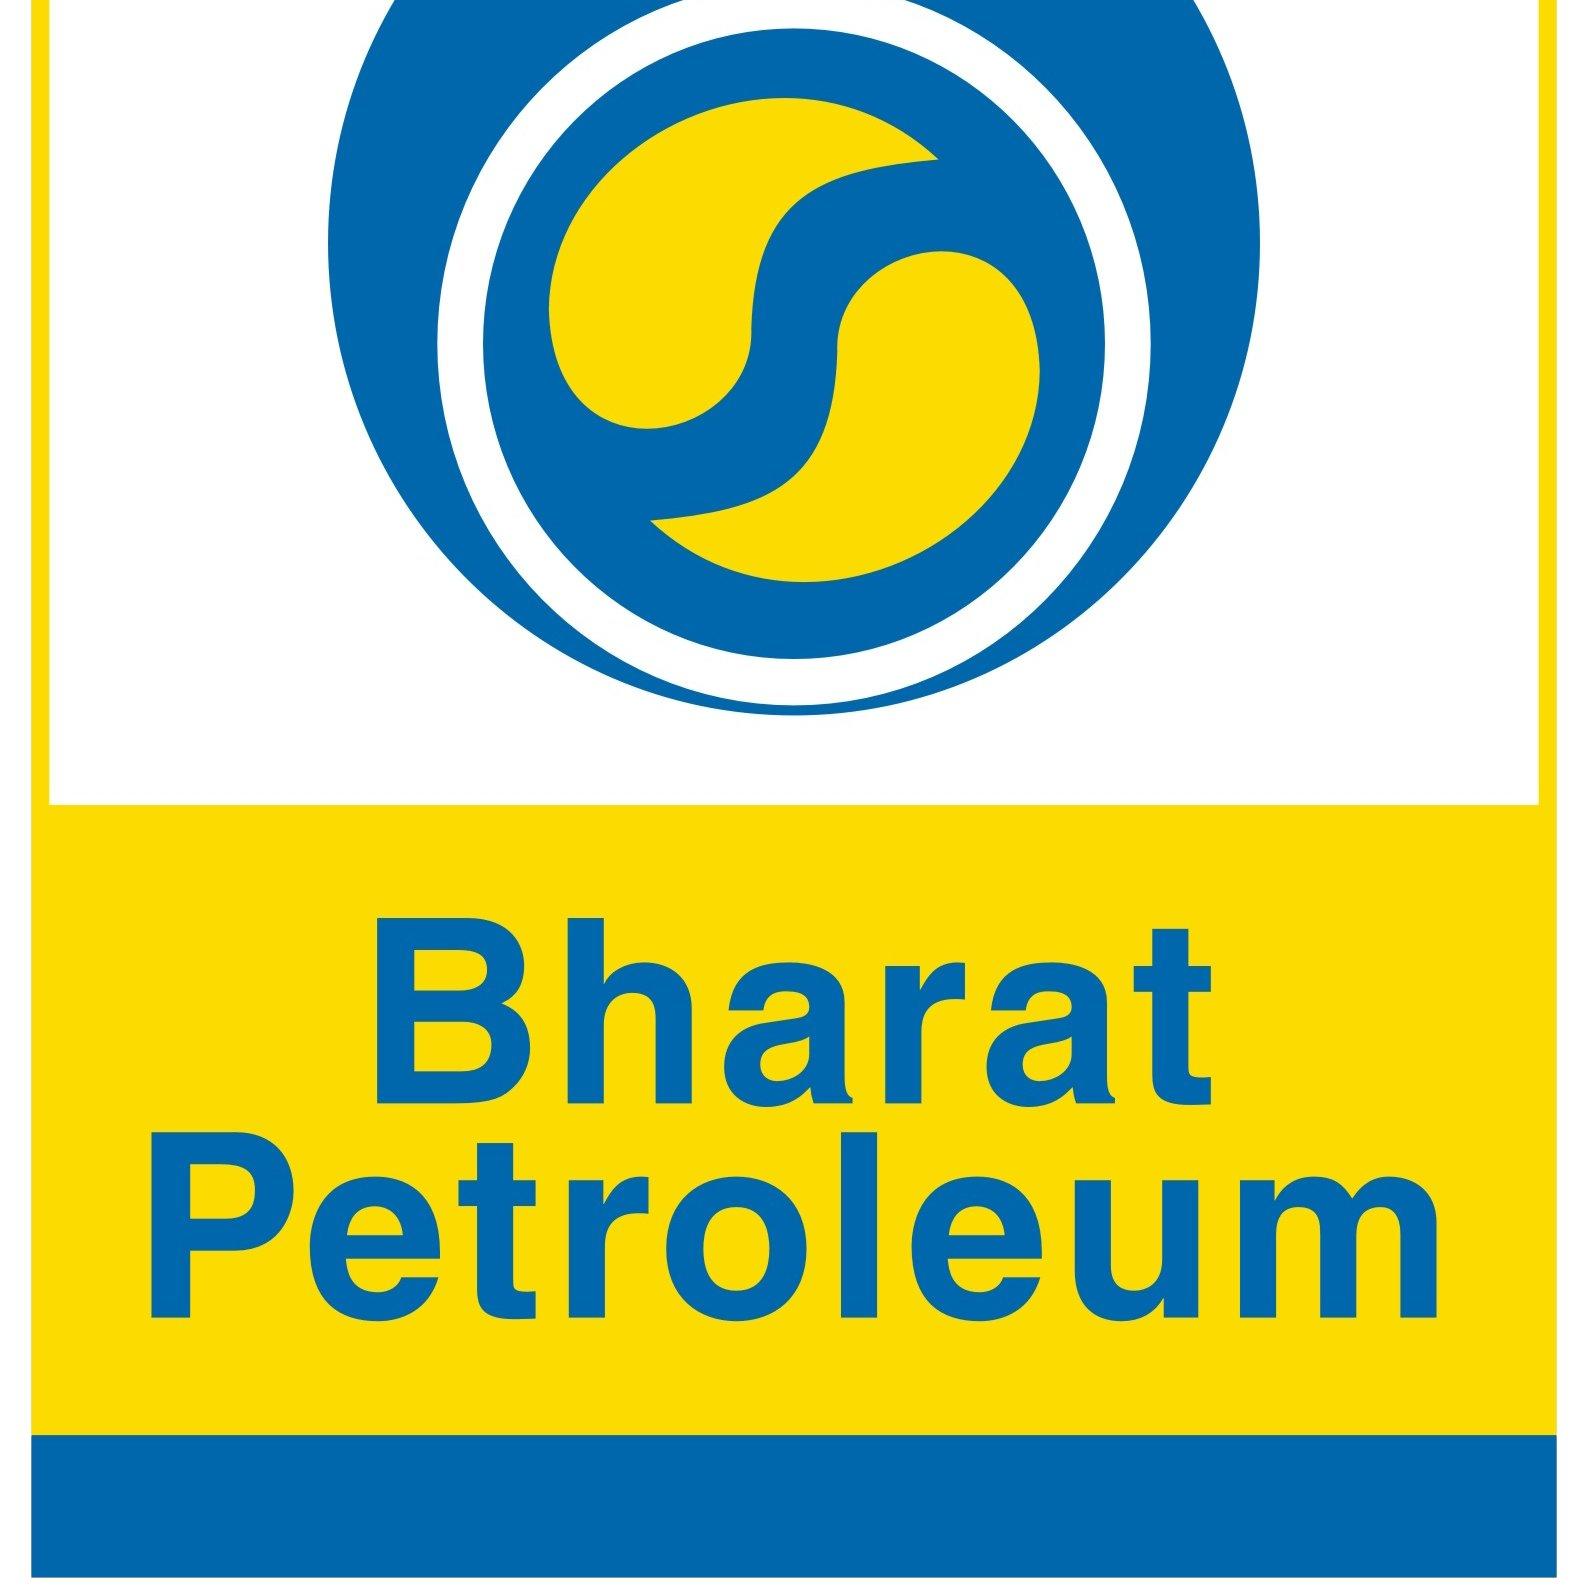 bharat petroleum corporation: bharat petroleum takes e-drive on e-mobility path, government news, et government